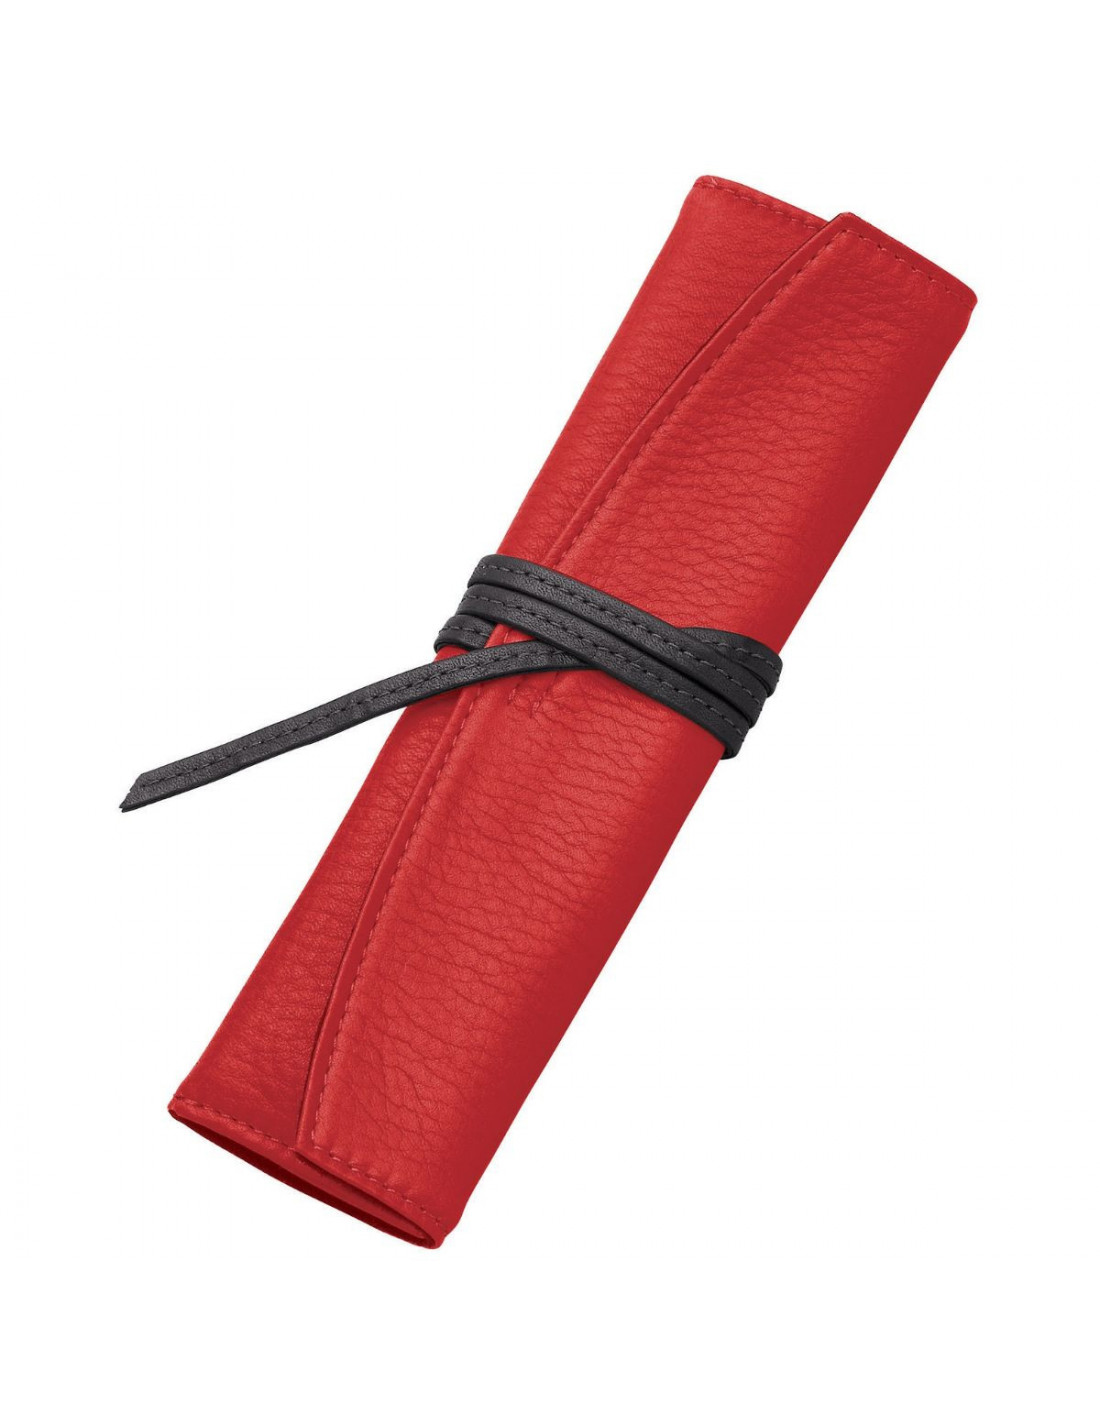 Grained Leather Pen Case - Red Size M - Pilot